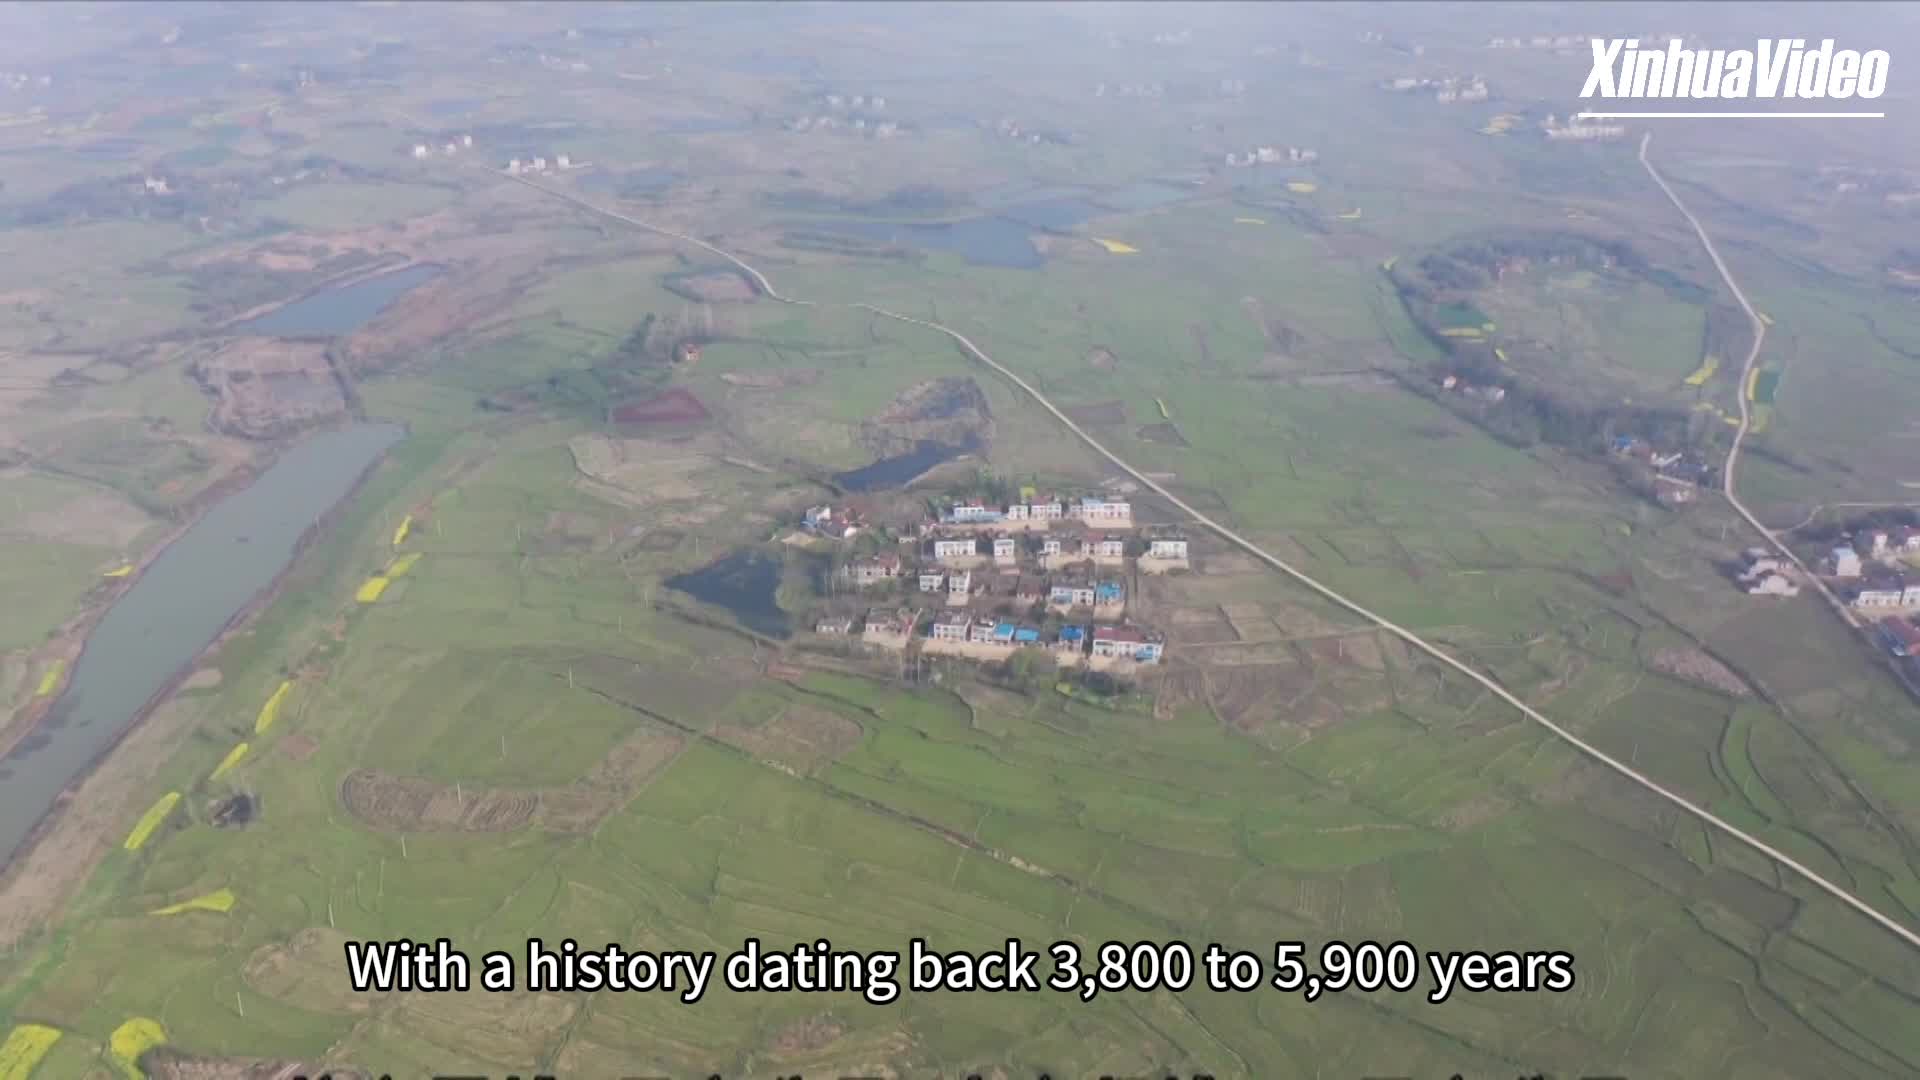 GLOBALink : ลัดเลาะรอบ 'เมืองโบราณยุคหินใหม่' อายุ 5,000 ปี ในหูเป่ย